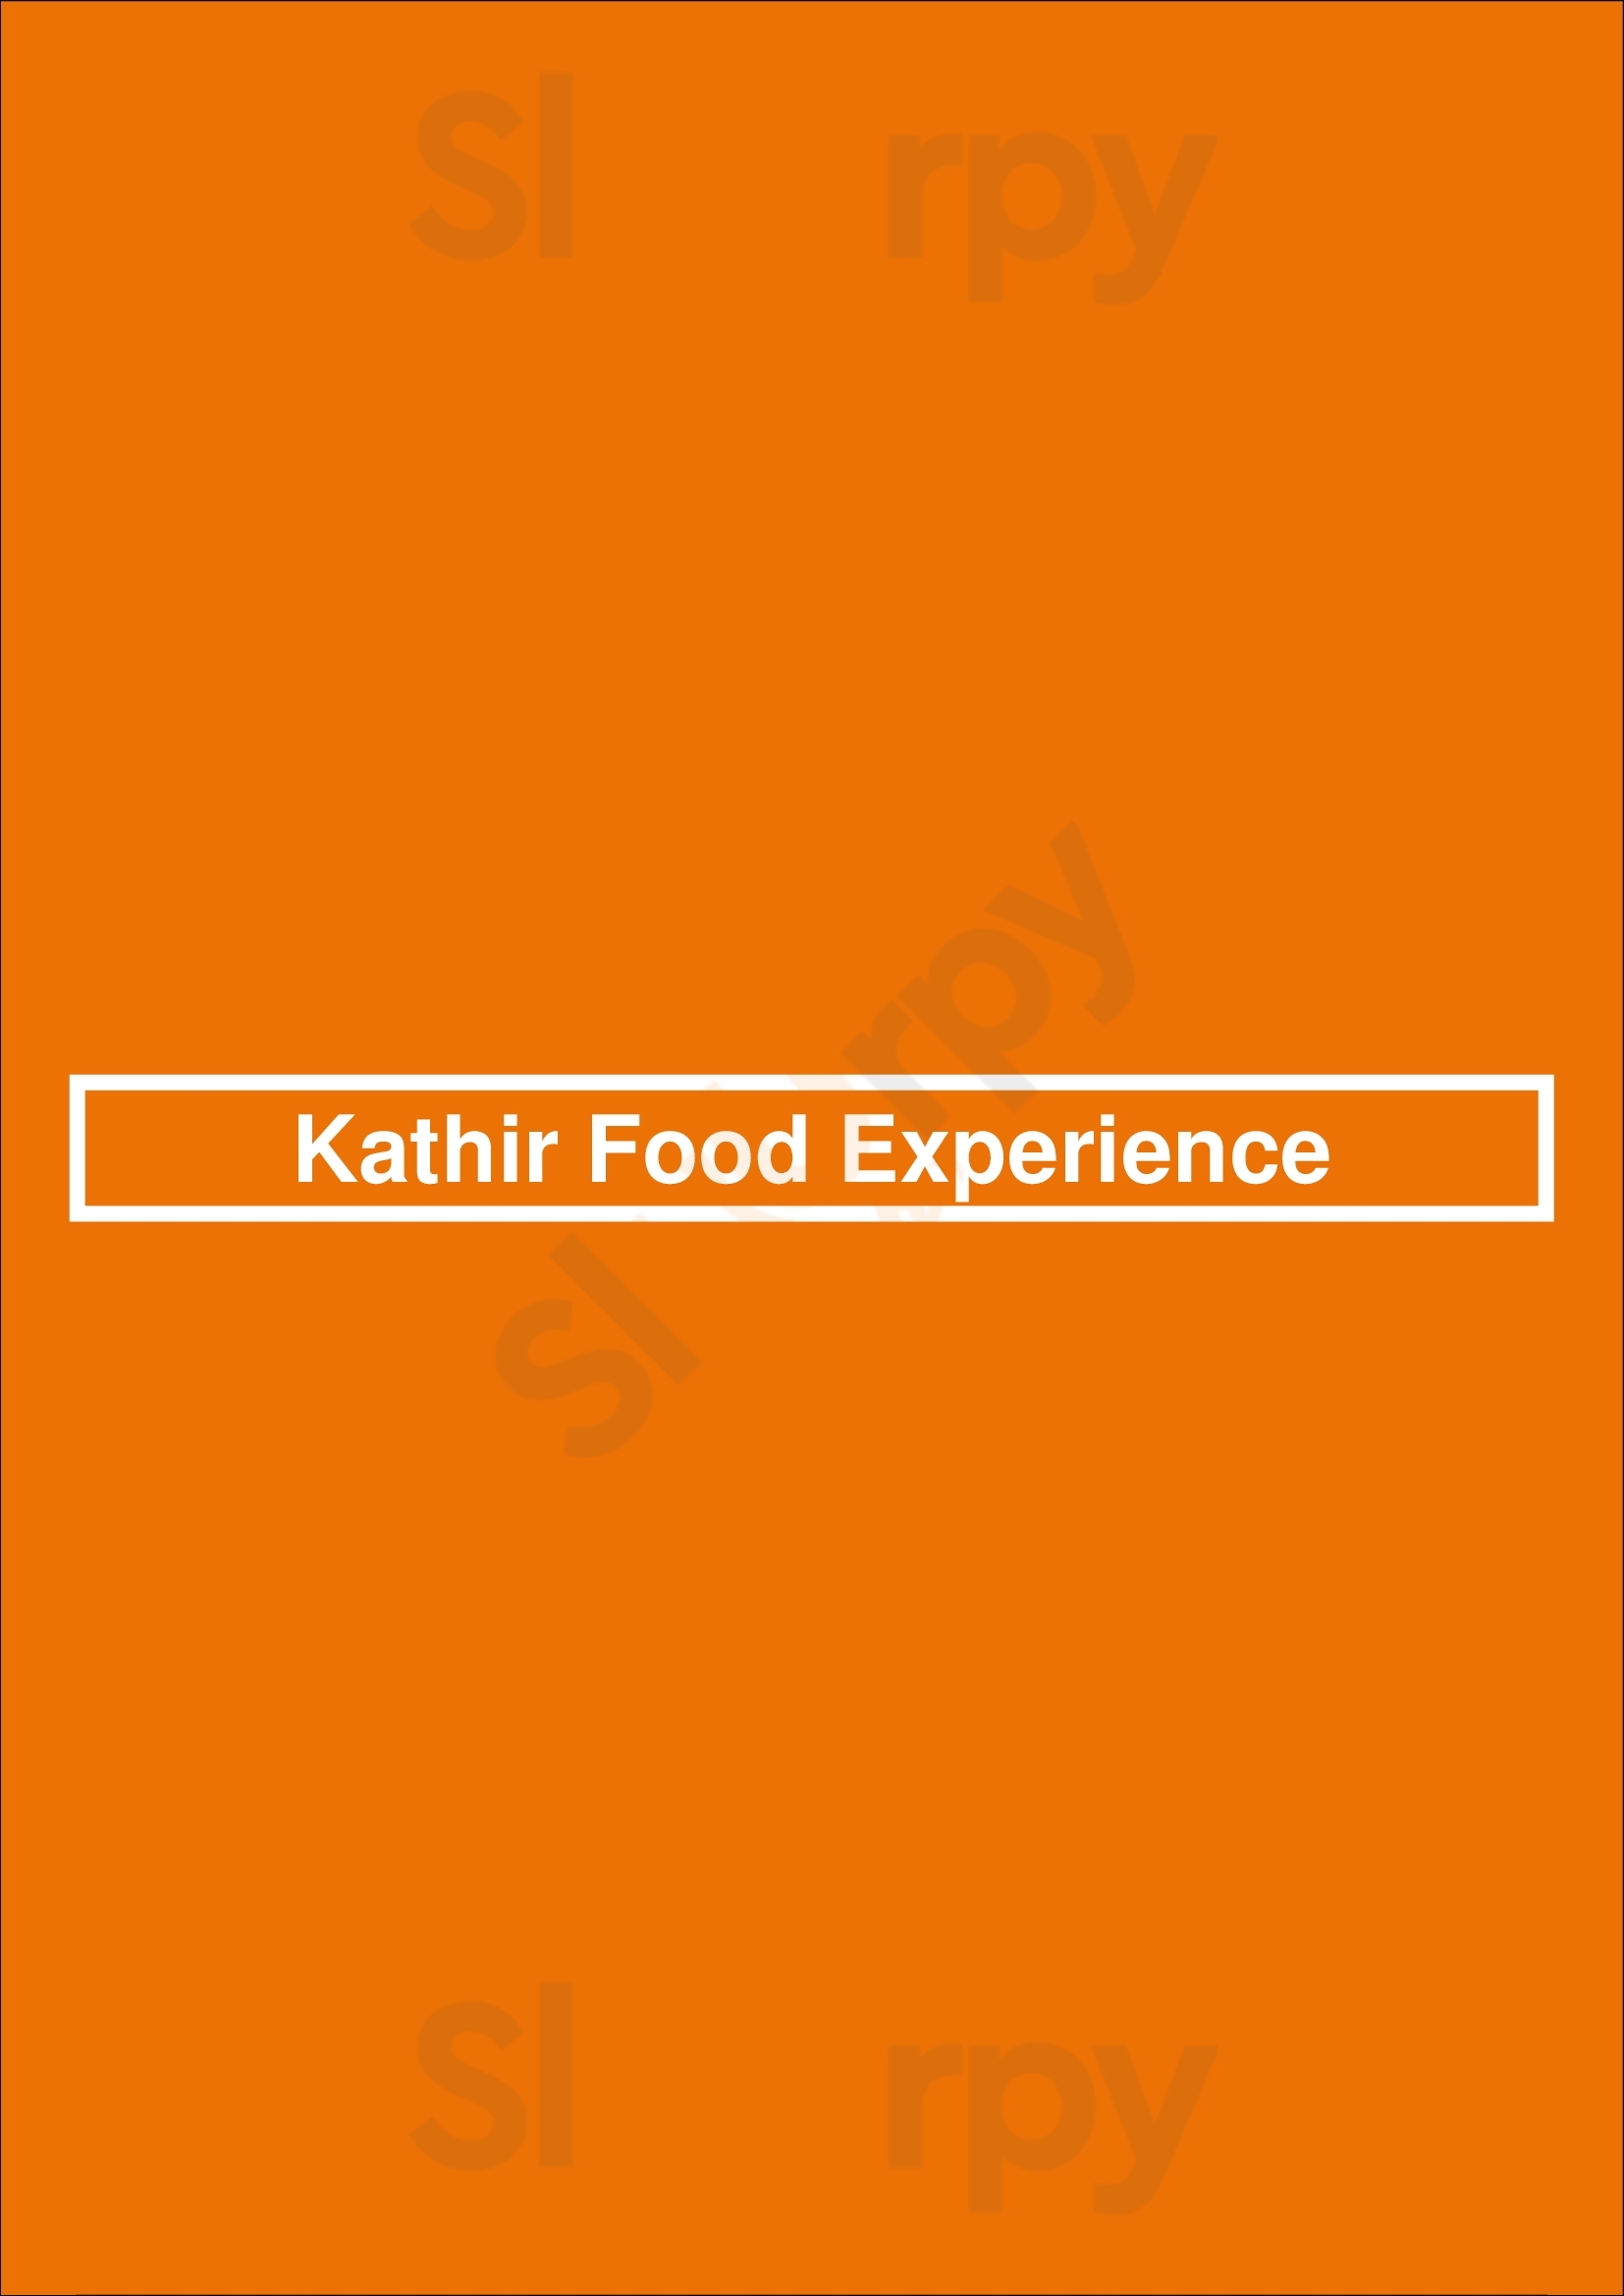 Kathir Food Experience Edmonton Menu - 1